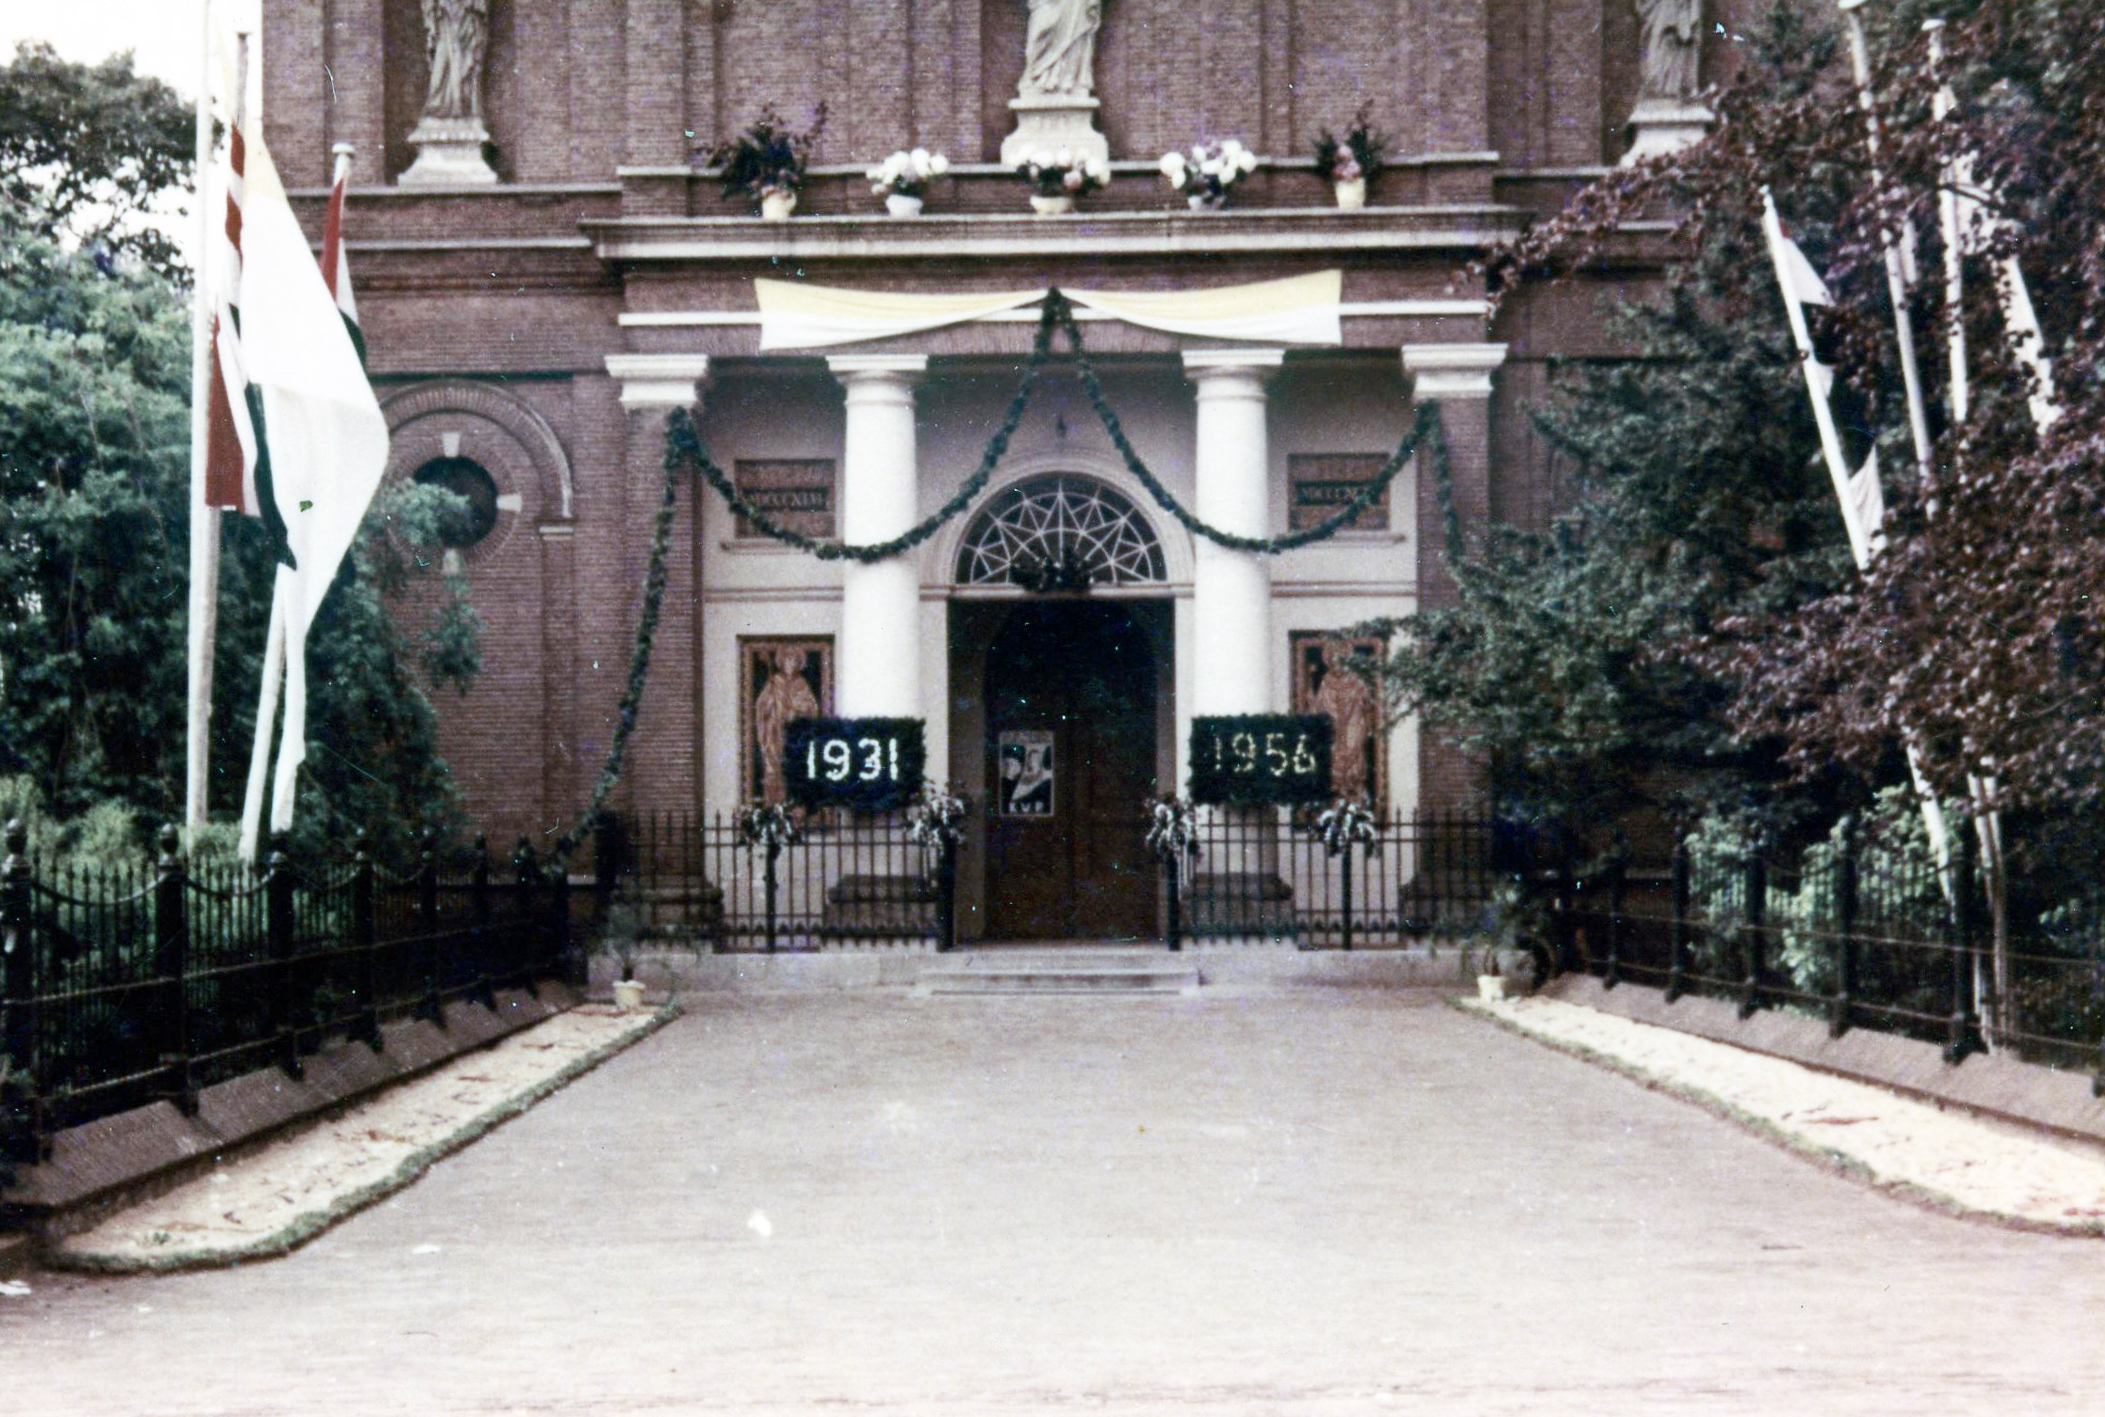 1956. Het kerkplein is versierd ter gelegenheid van het 25-jarig priesterjubileum van pastoor F. van de Berk (fotograaf onbekend)